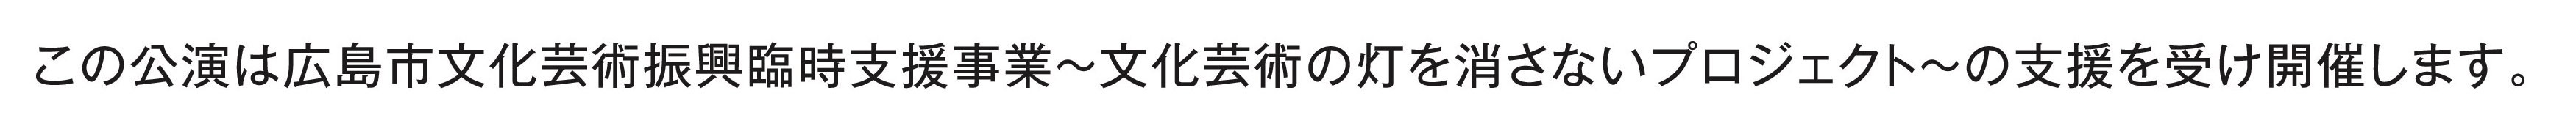 hiroshimamodel.tate.outlineのコピー.jpg